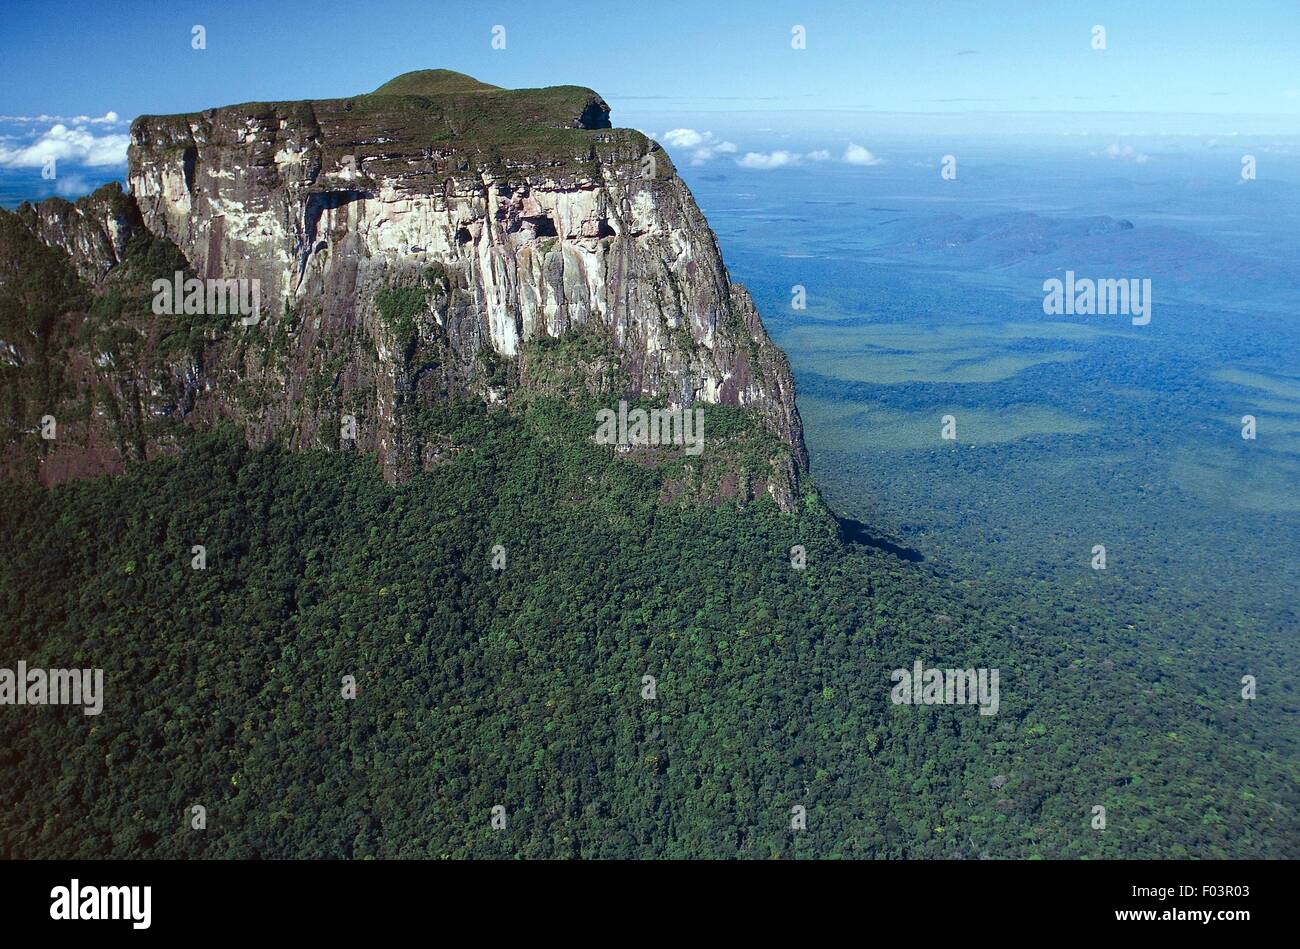 Venezuela - Guayana - Amazonas - Cerro Autana (1208 meters), the sacred mountains of the Piaroa Indians, declared natural monument in 1978. Stock Photo